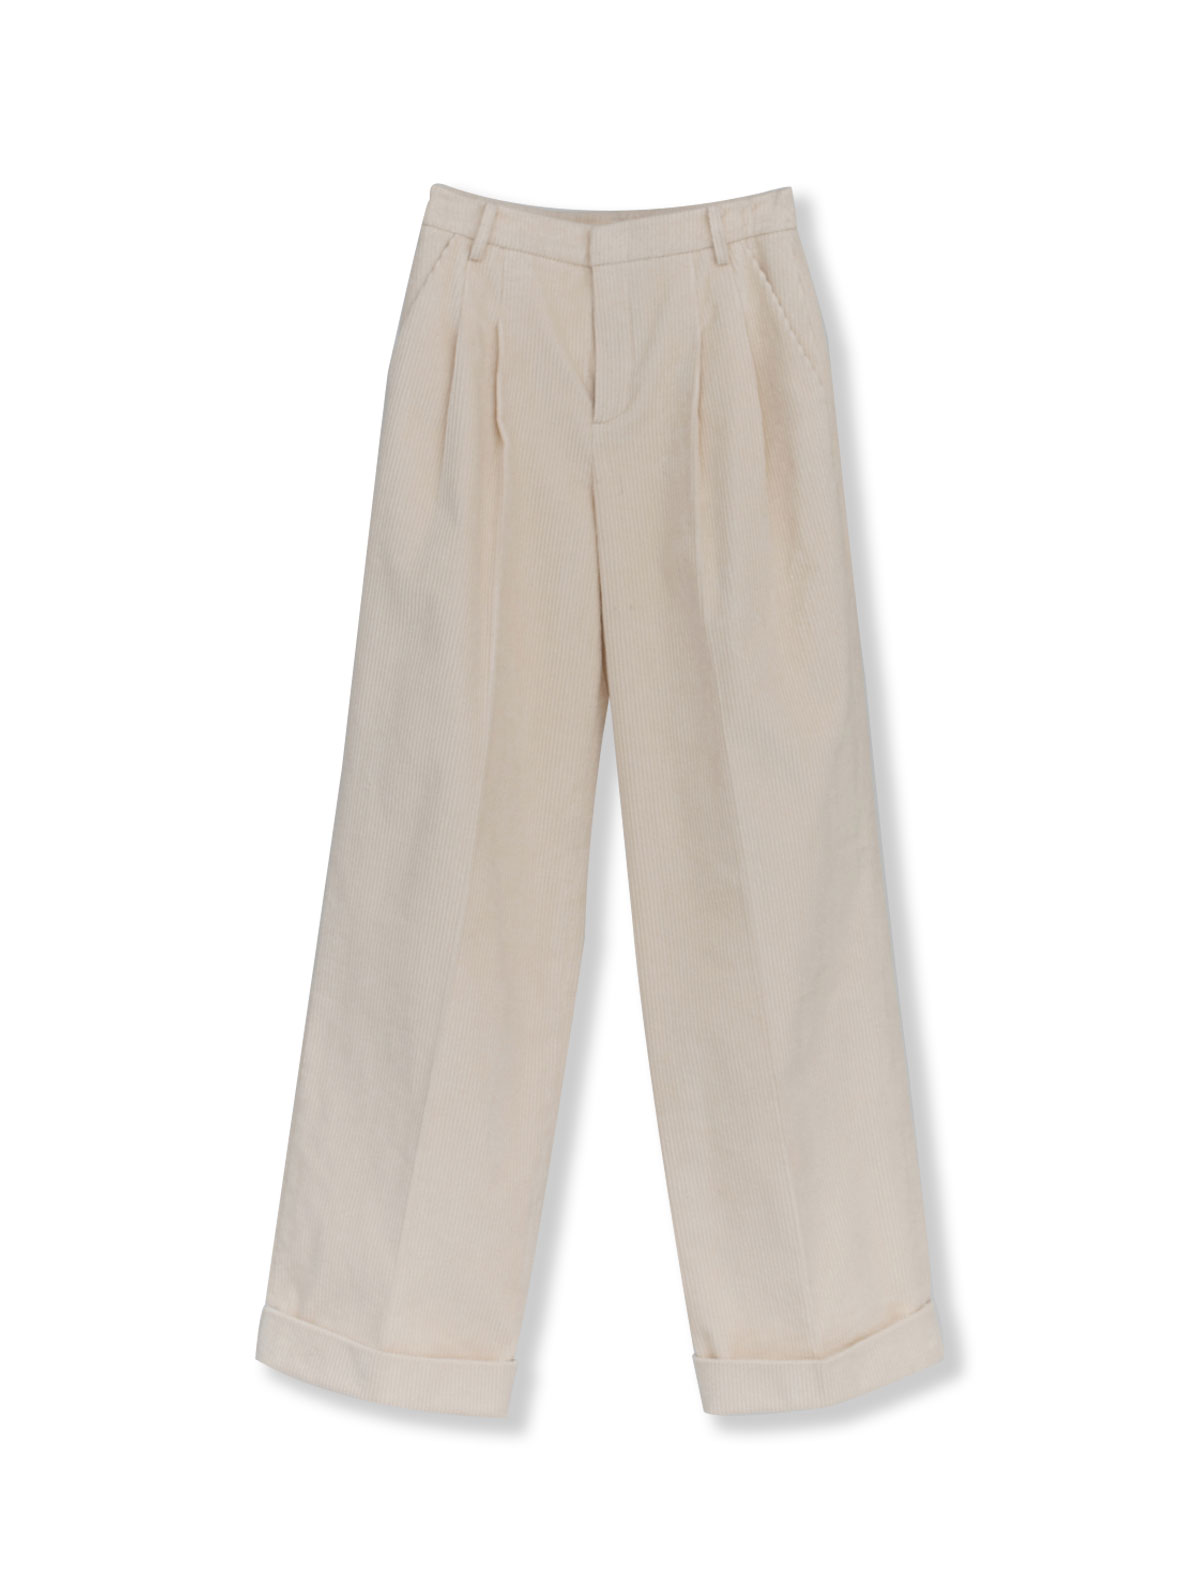 Cotton Corduroy Trousers (Ivory)